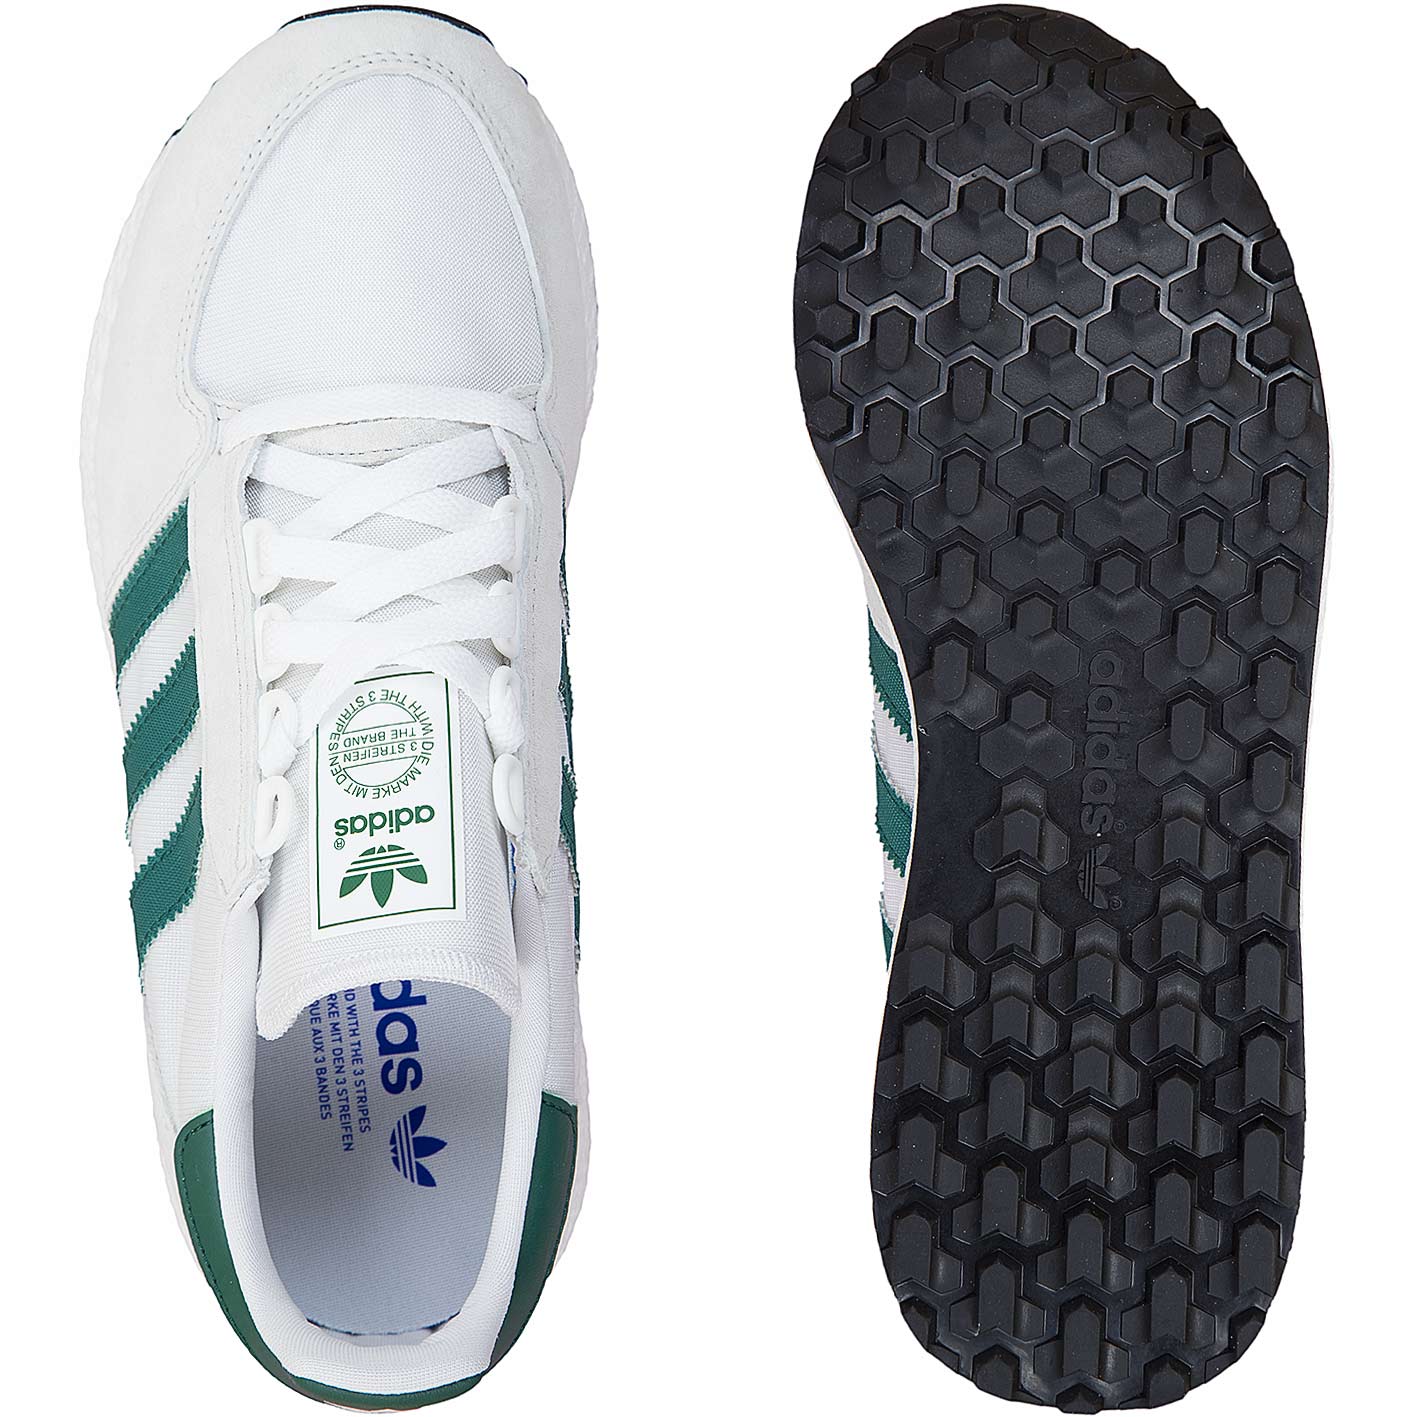 ☆ Adidas Originals Sneaker Forest Grove weiß/grün - hier bestellen!